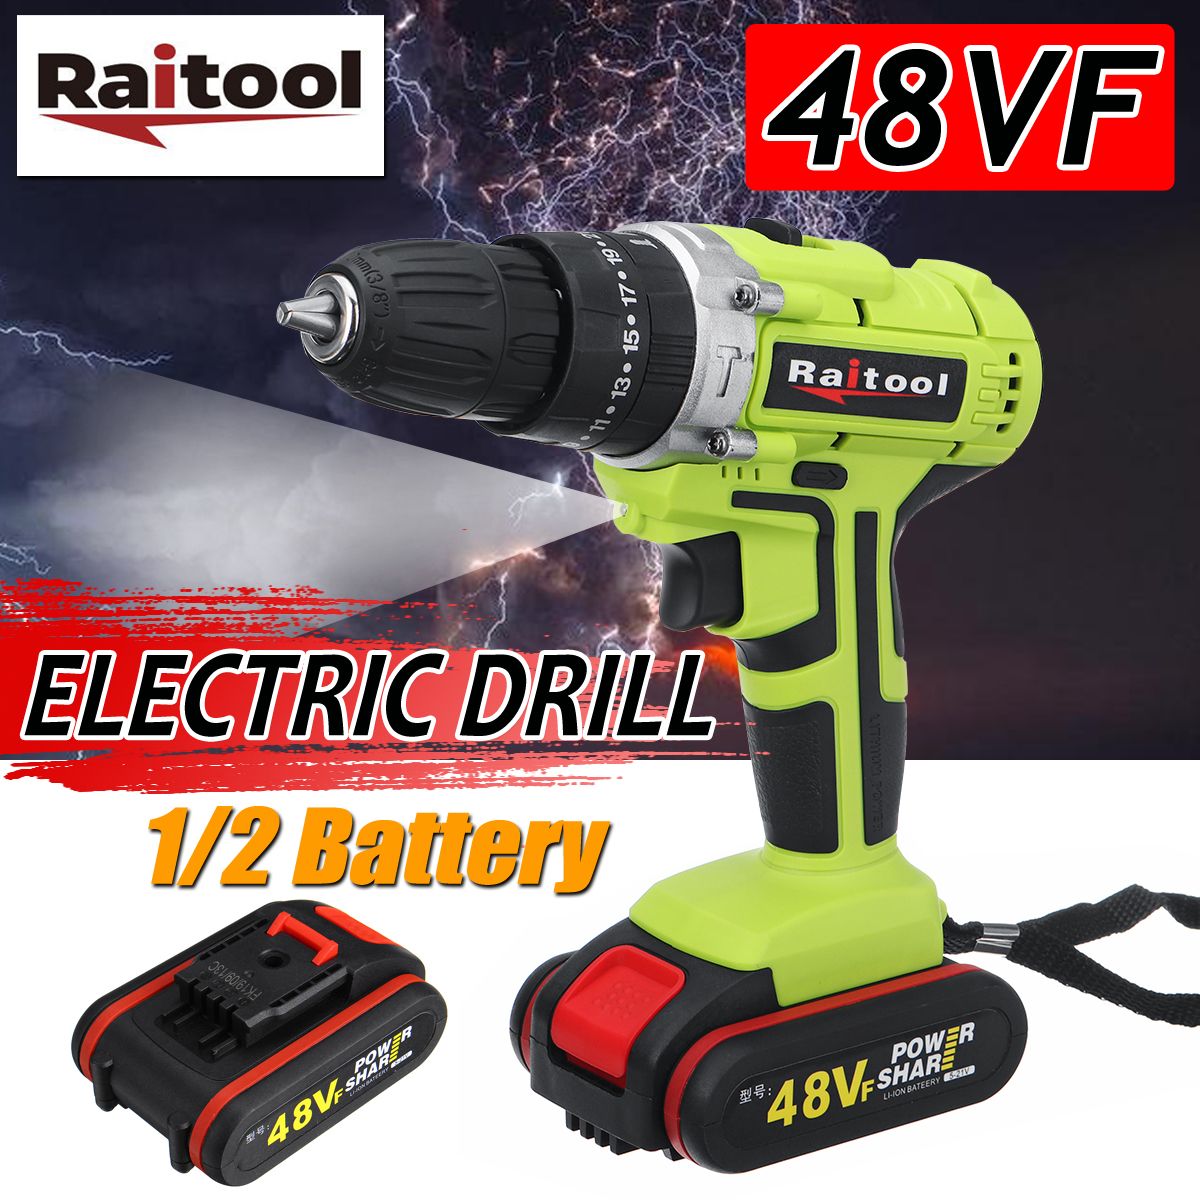 Raitool-48VF-Cordless-Electric-Impact-Drill-2-Speed-Power-Screwdriver-W-1-or-2-Li-ion-Battery-1595951